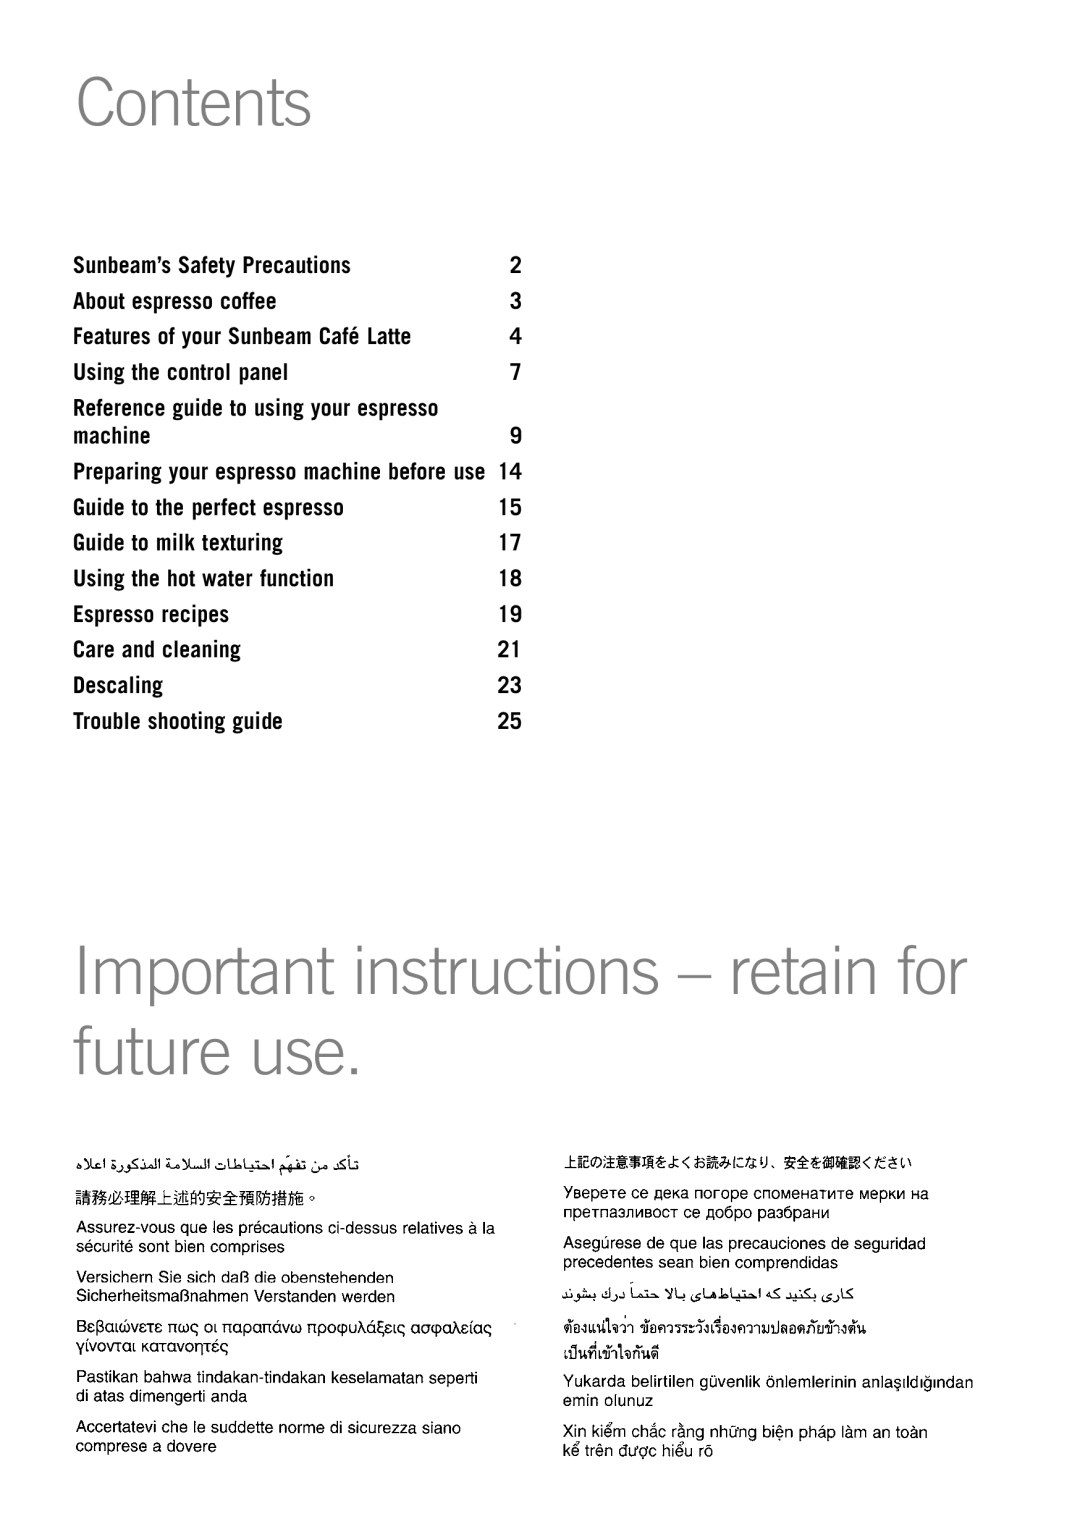 Sunbeam EM5600 Contents, Important instructions - retain for future use, Sunbeam’s Safety Precautions, machine, Descaling 